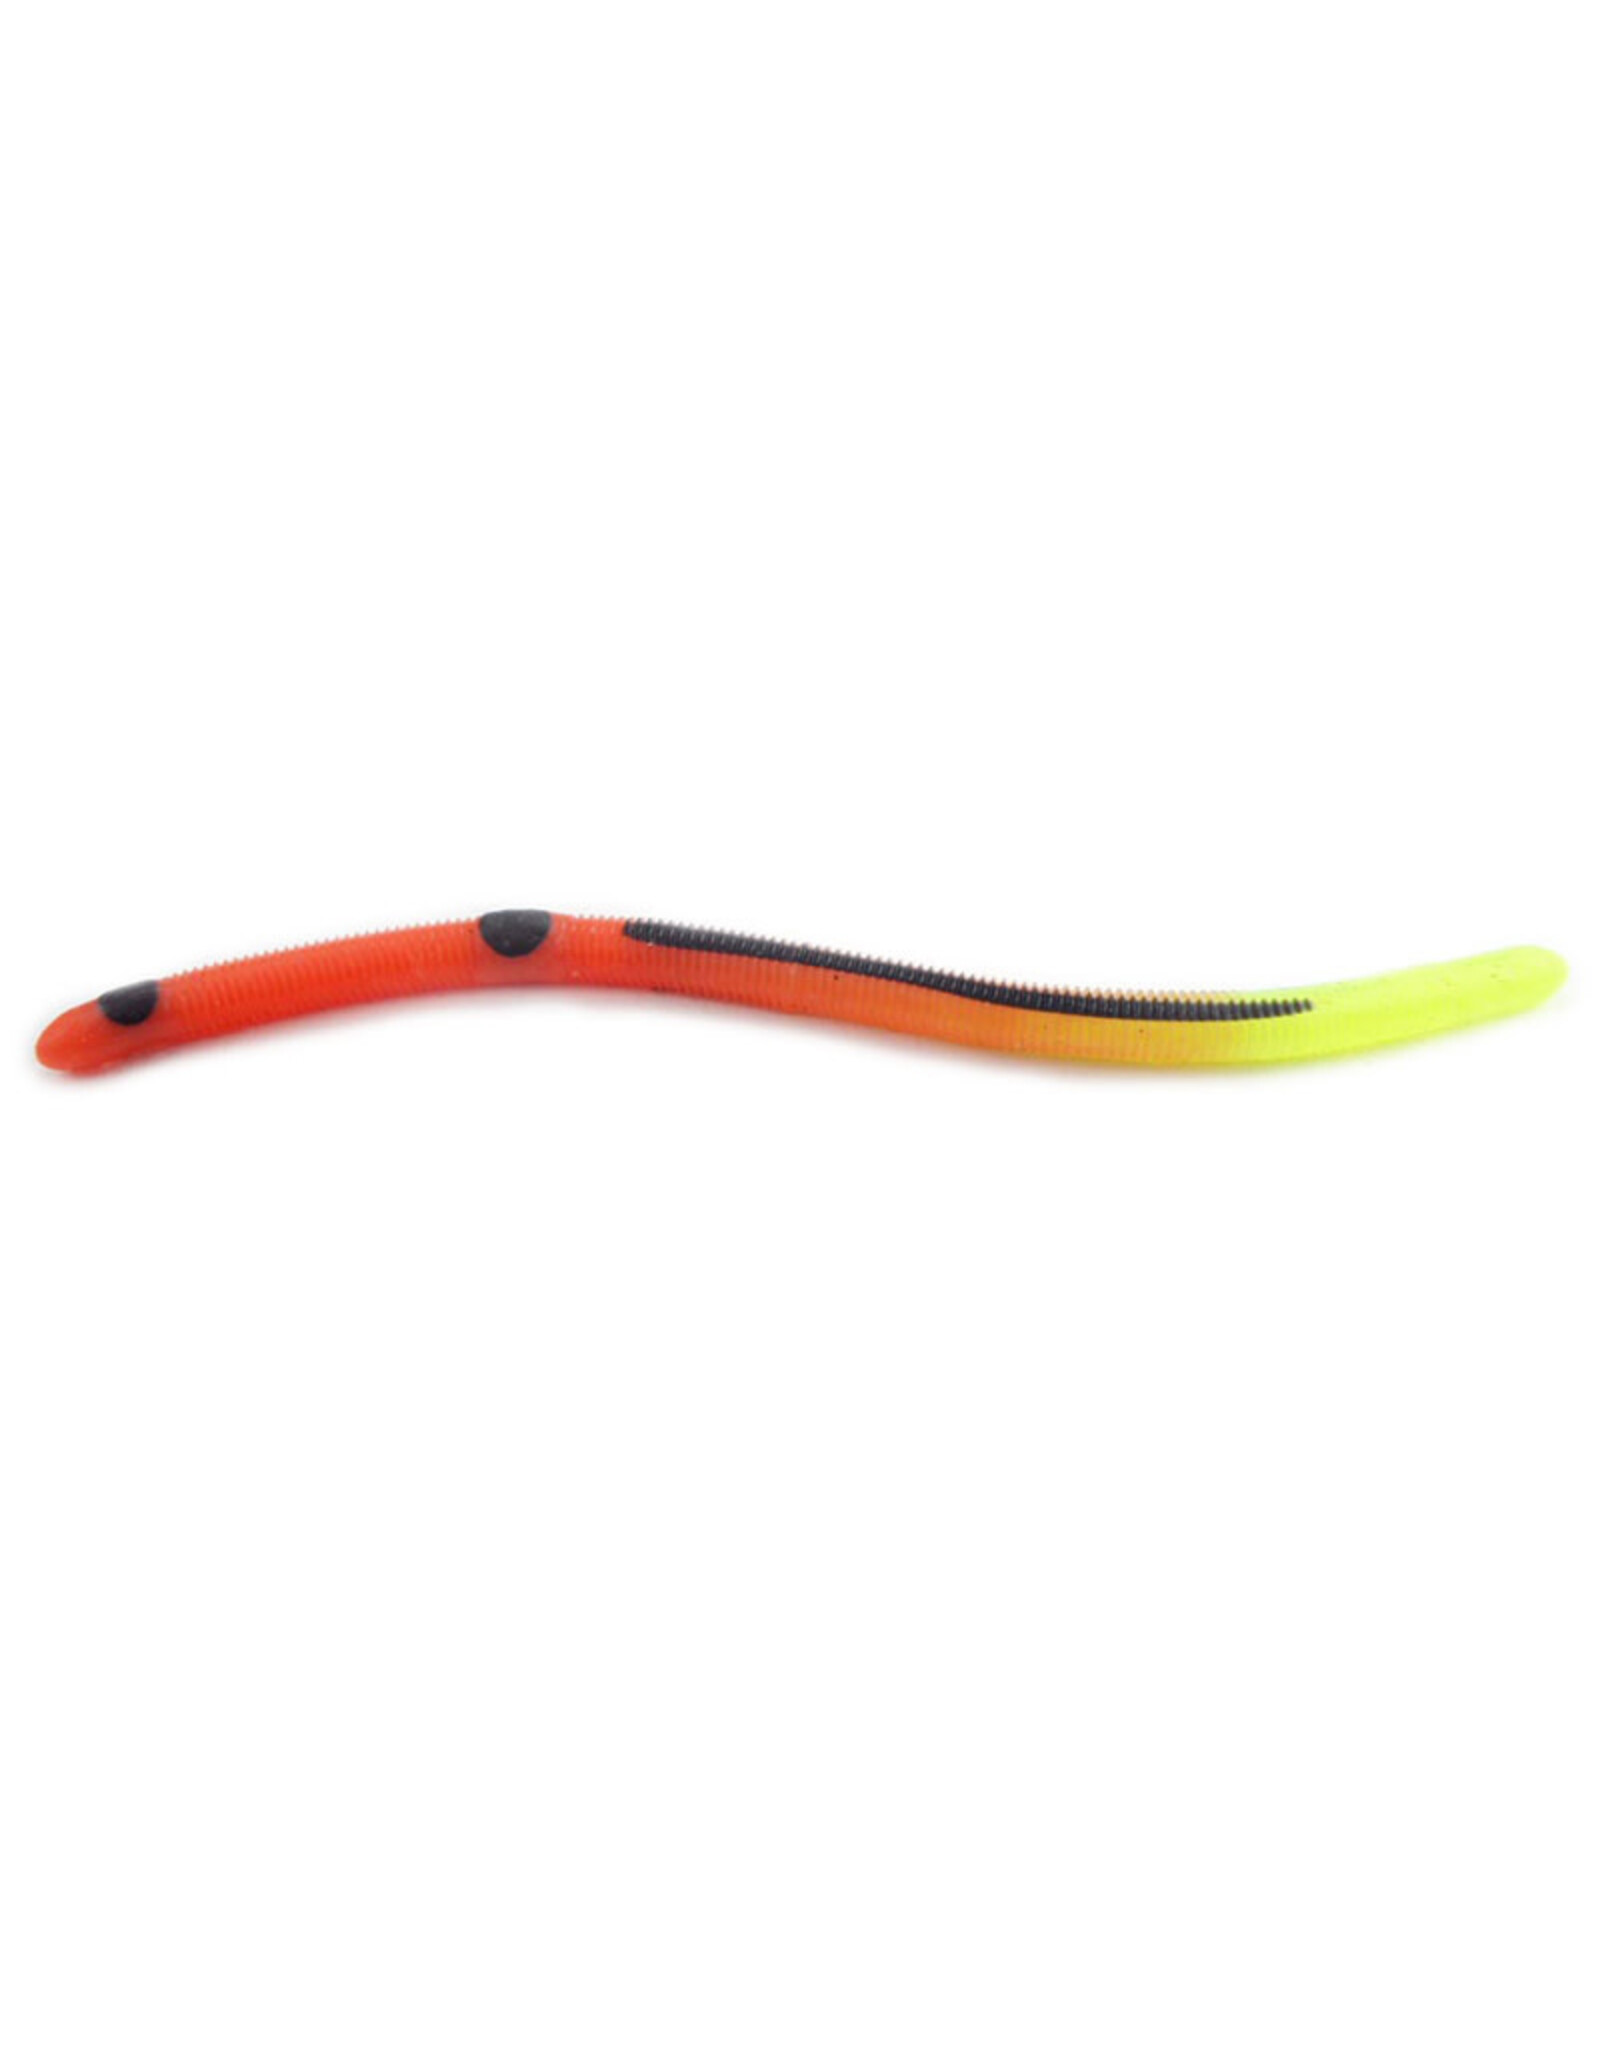 Kellys Kellys Fire Tail Pre-Rigged Plastic Worm 5 1/2" 3 #6 Hooks